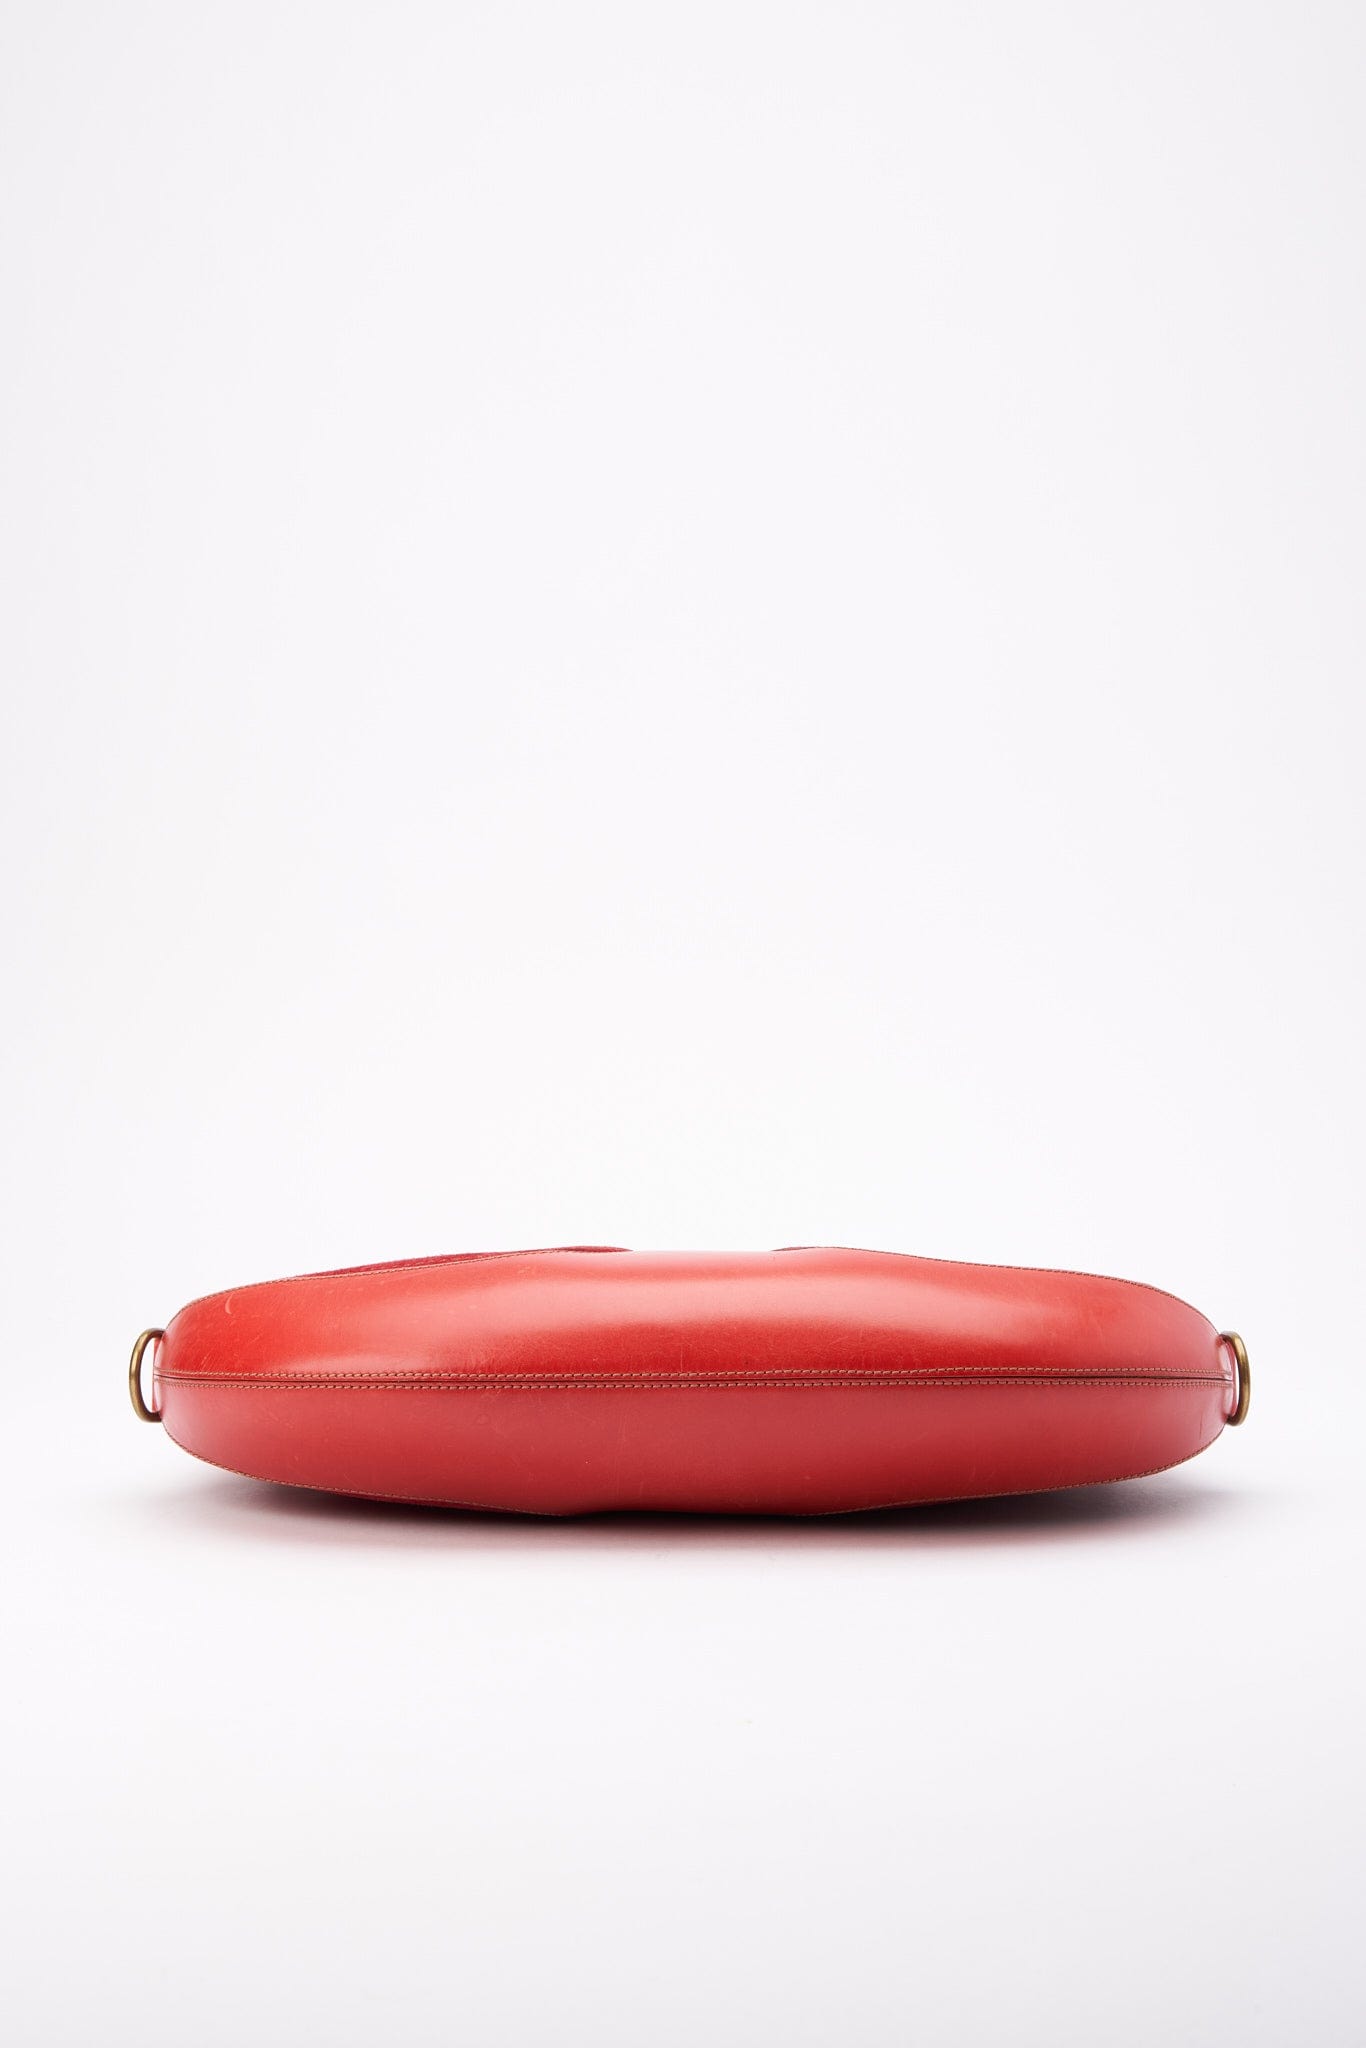 Vintage Loewe Red Leather and Suede Shoulder Bag